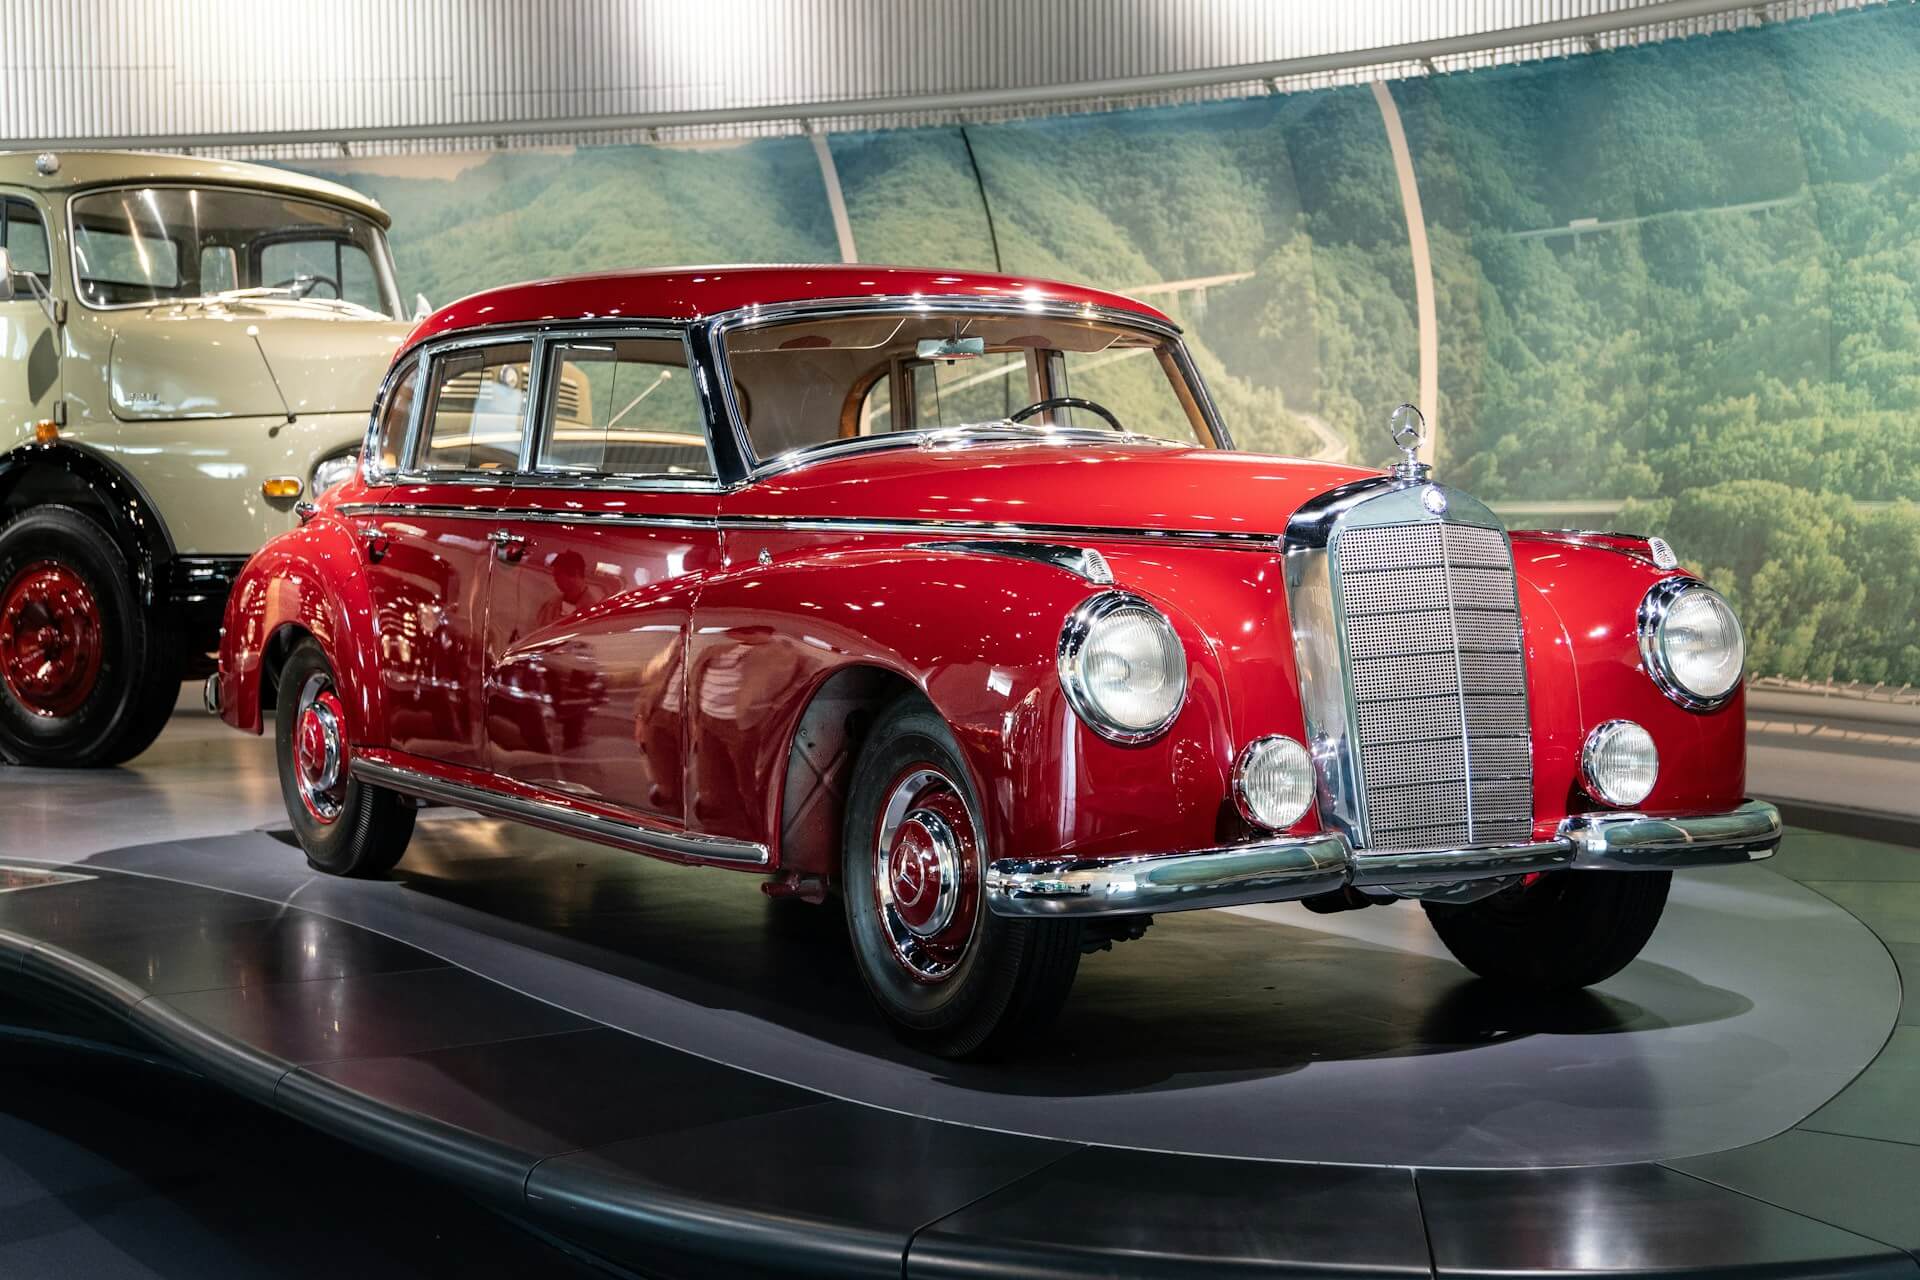 Muzeum Mercedes-Benz